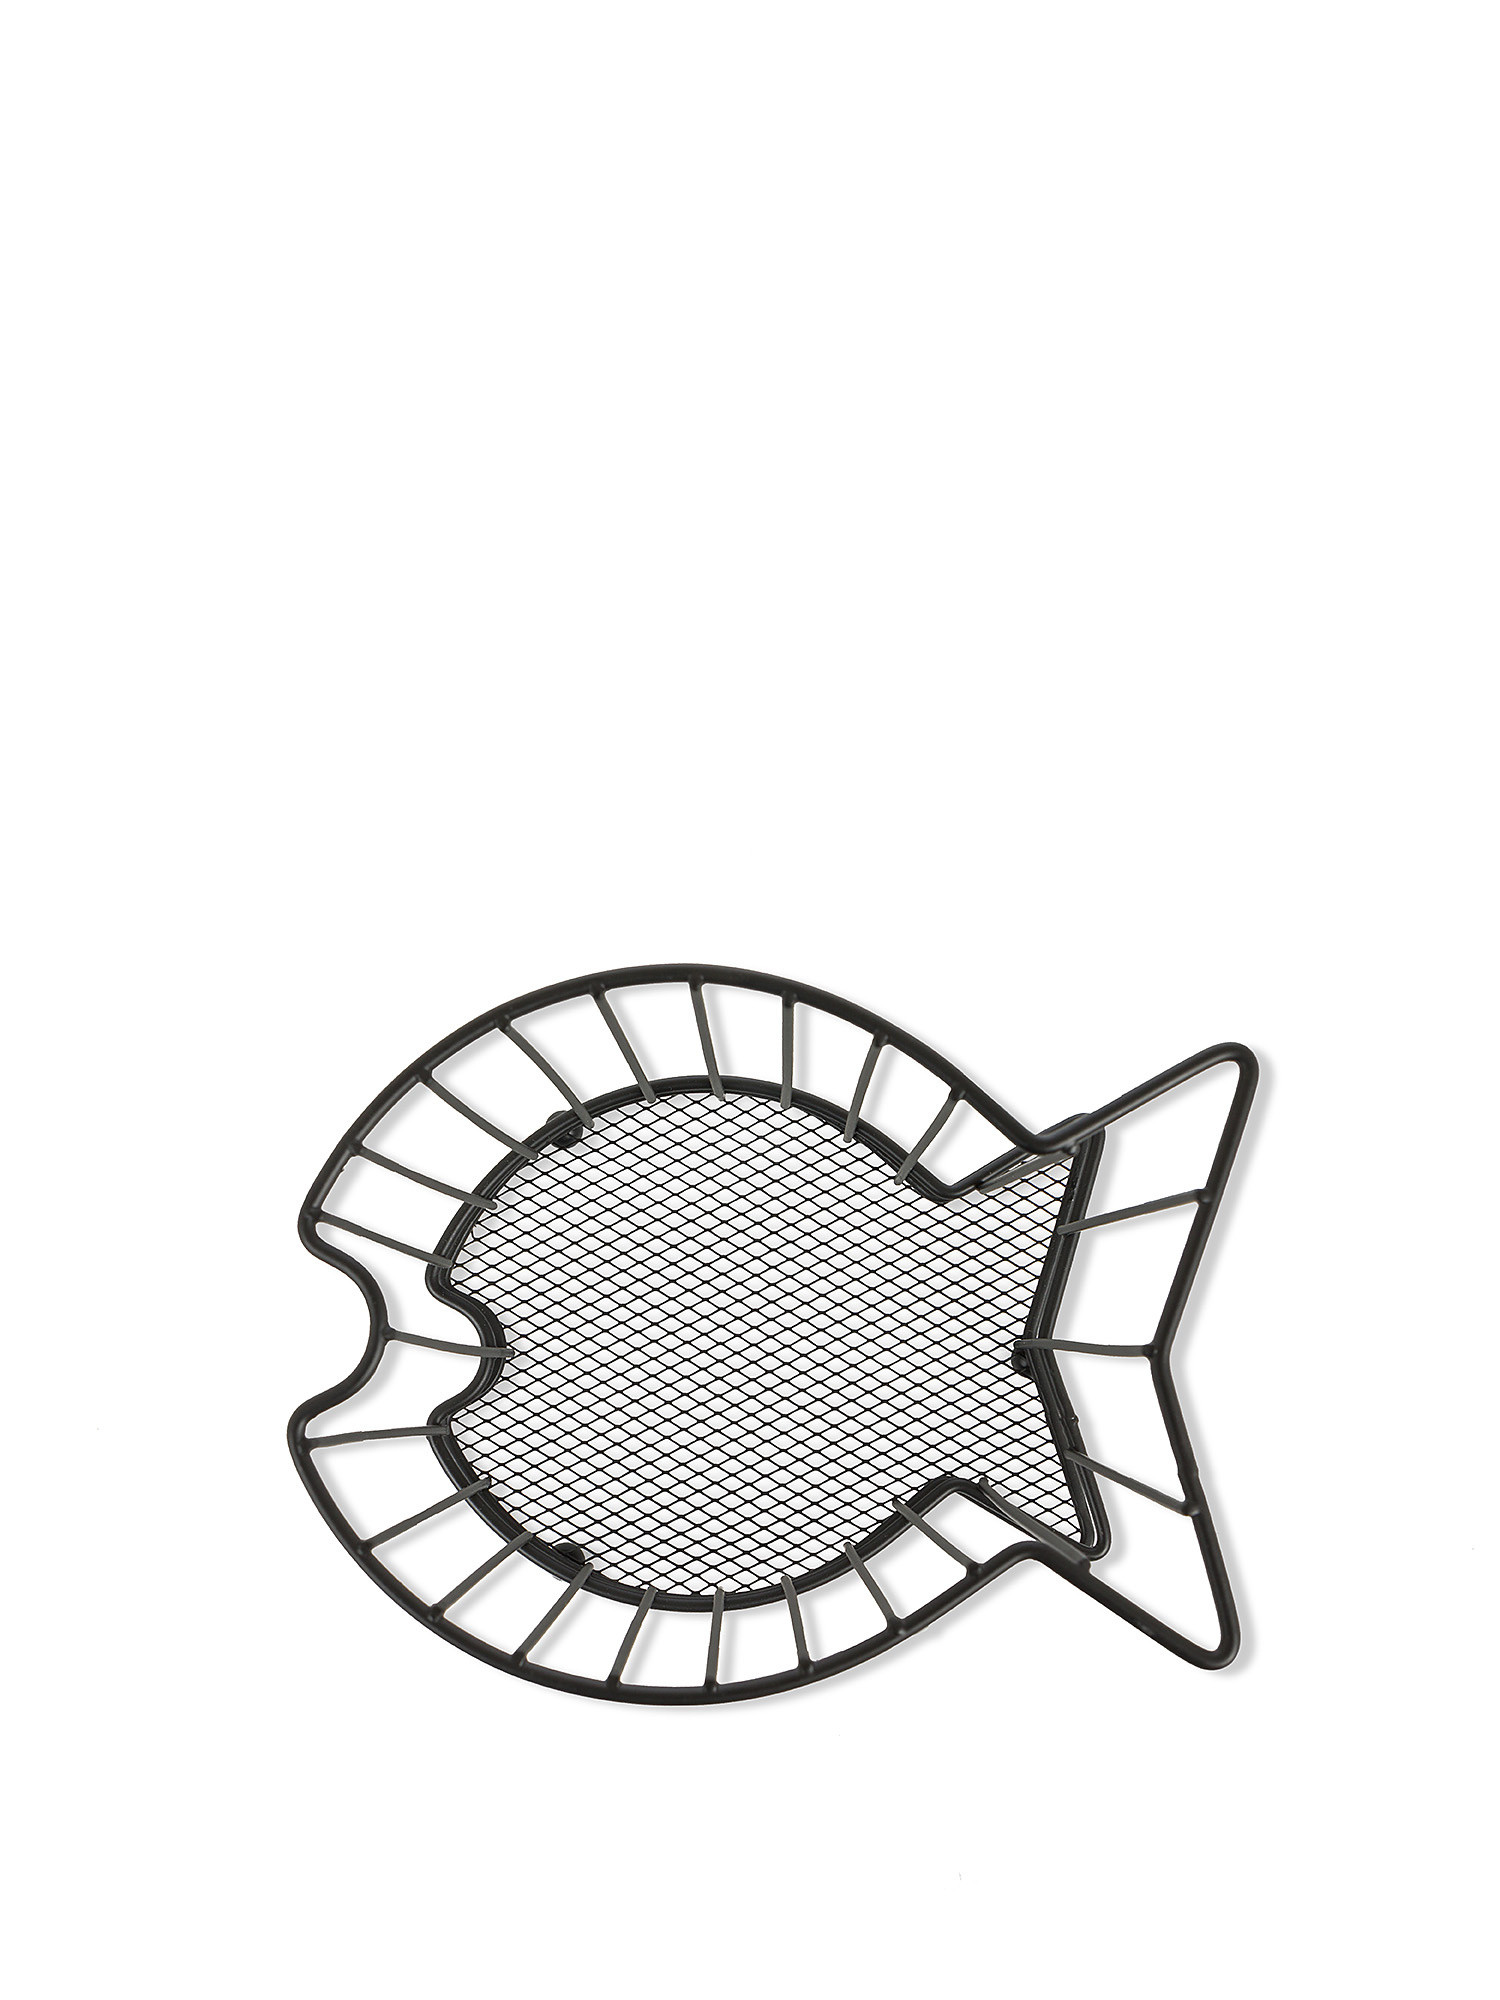 Fish shaped black wire tool holder, Black, large image number 1